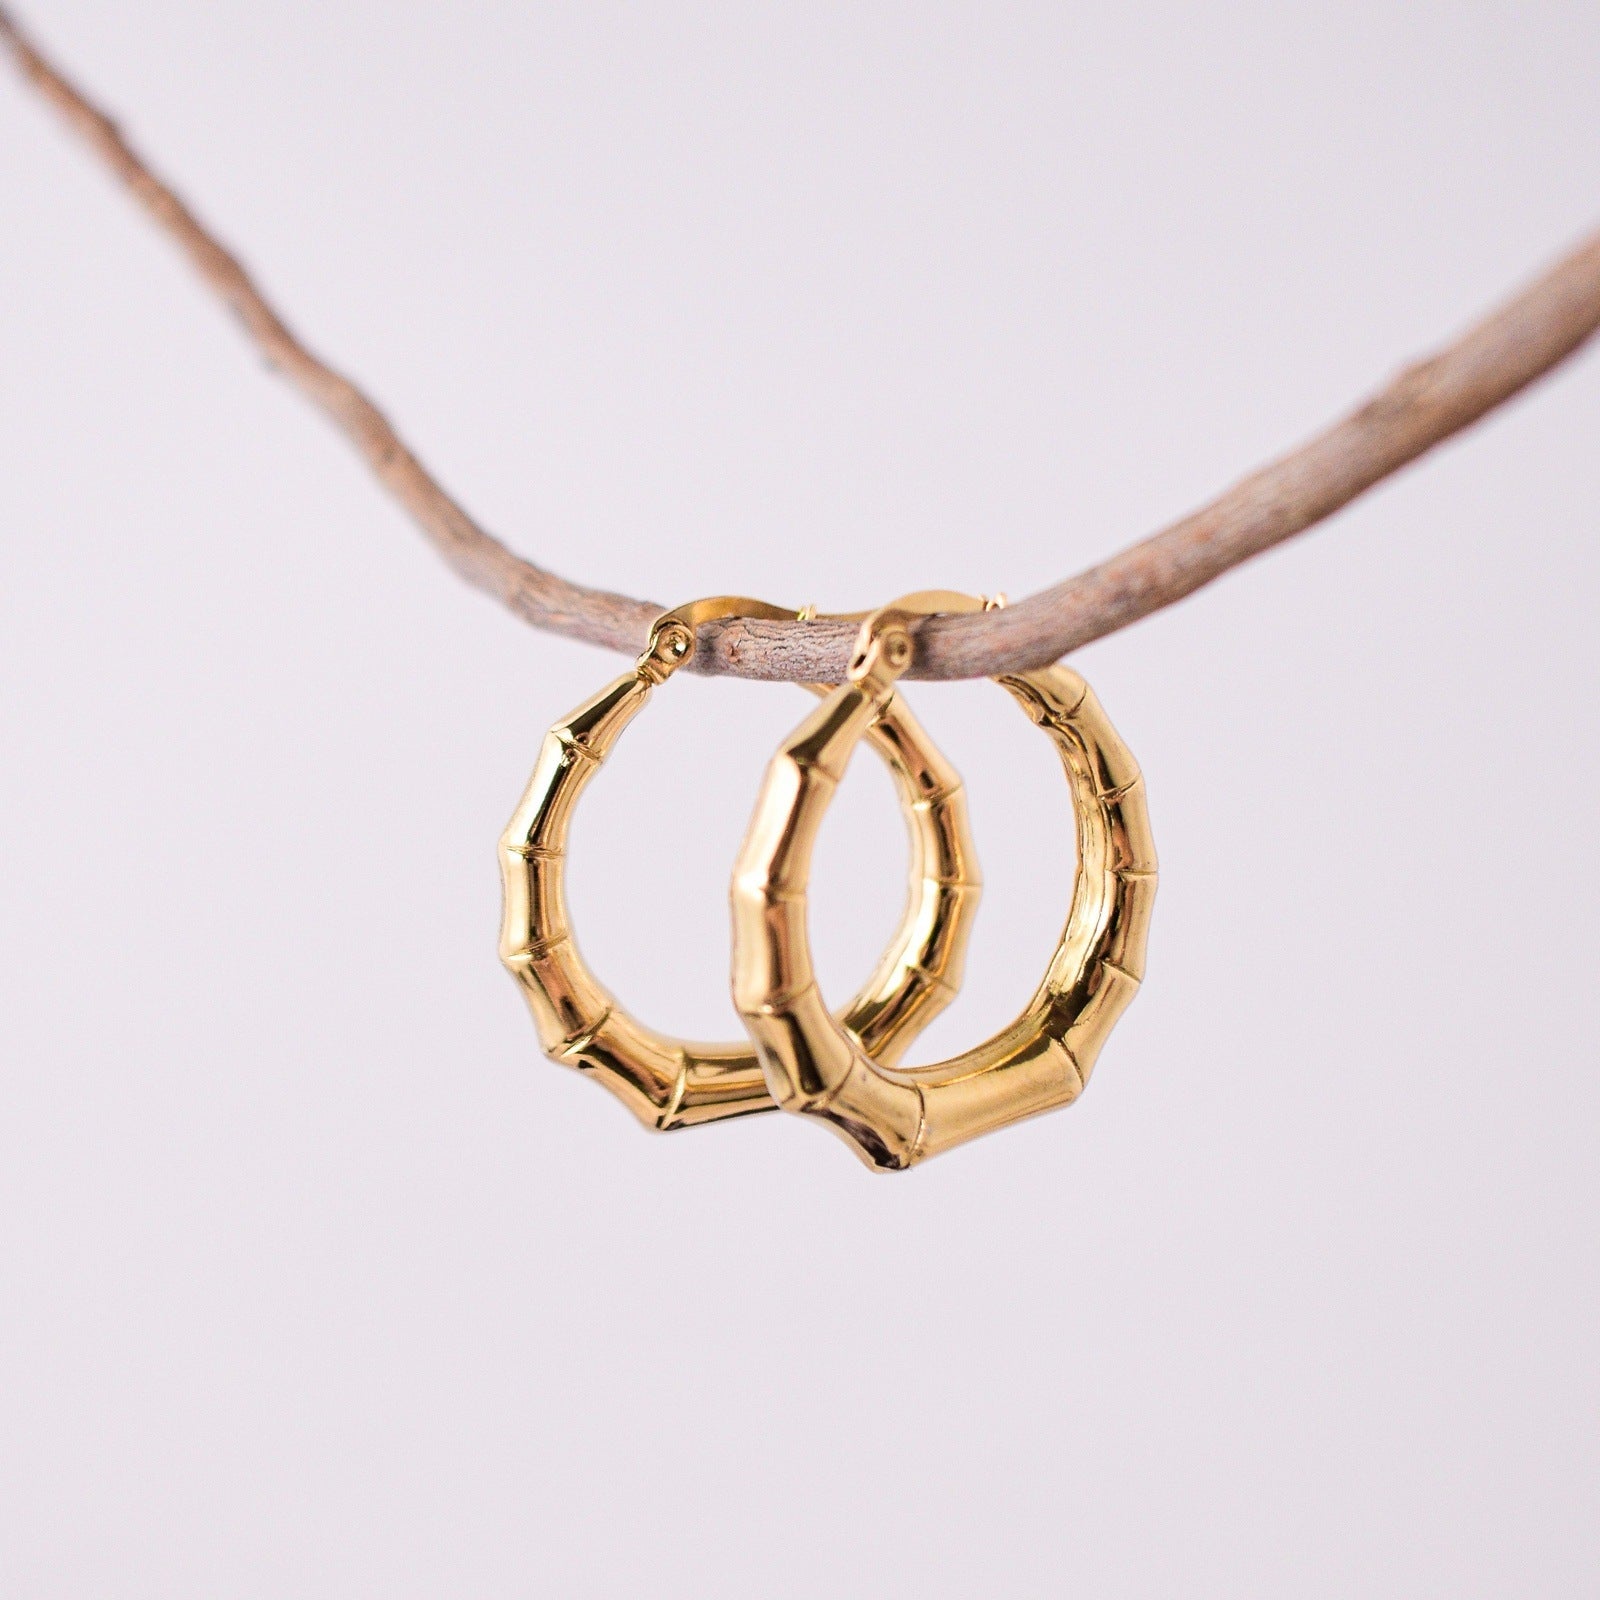 circe hoops earrings for women